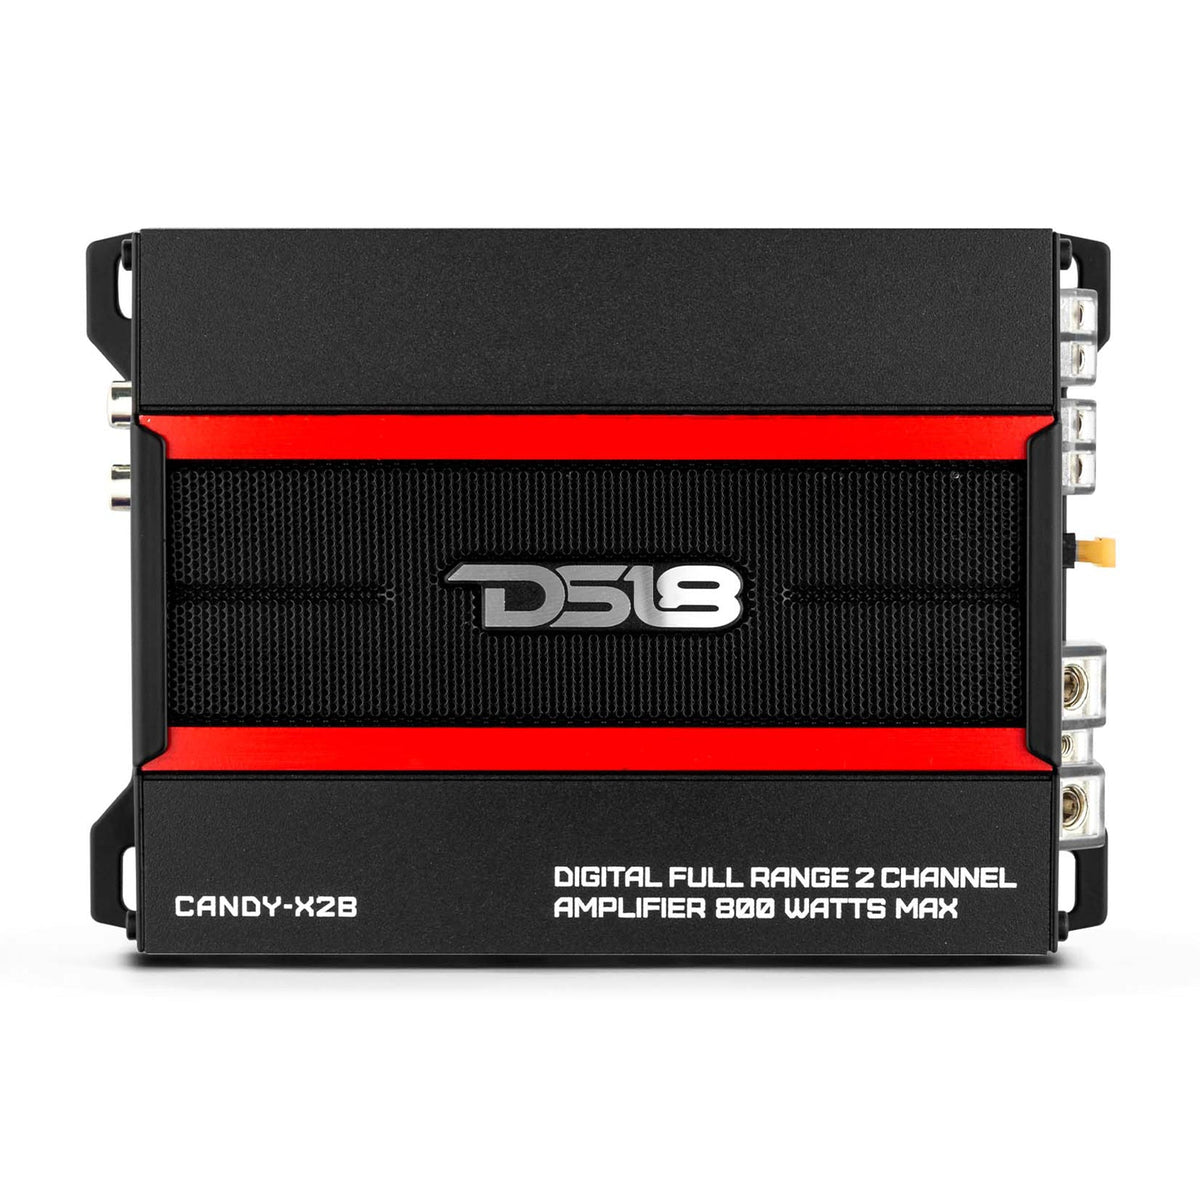 DS18 CANDY-X2B Compact Full-Range Class D 2-Channel Car Amplifier 800 Watts